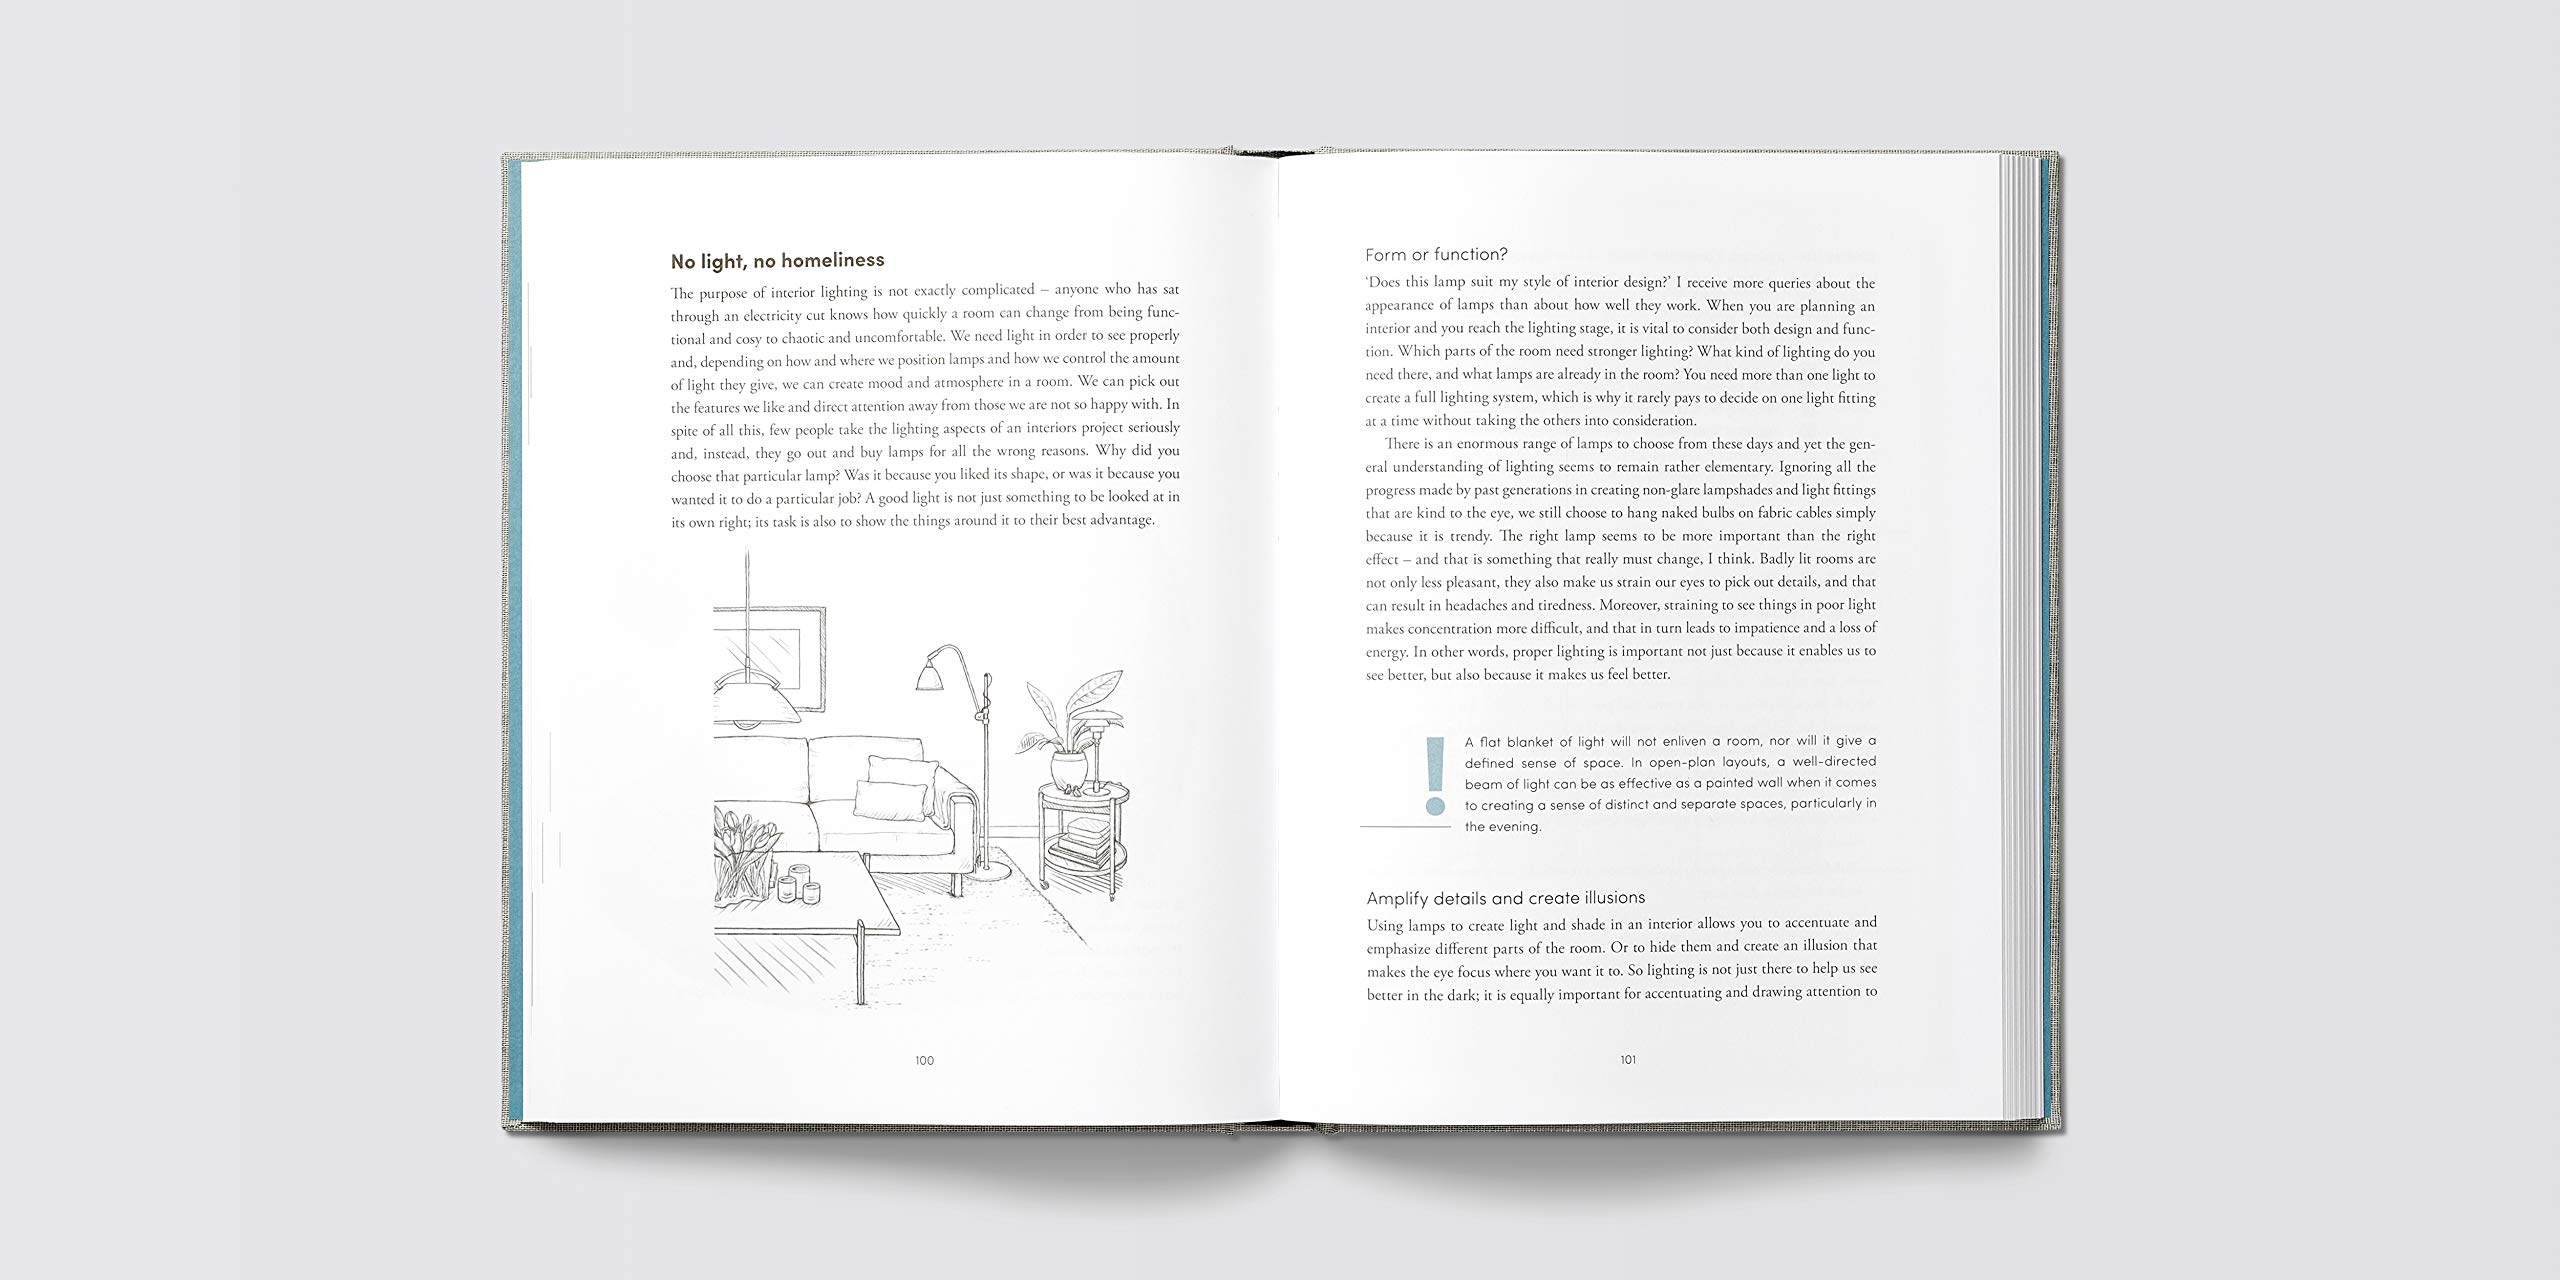 The Interior Design Handbook | Papercut